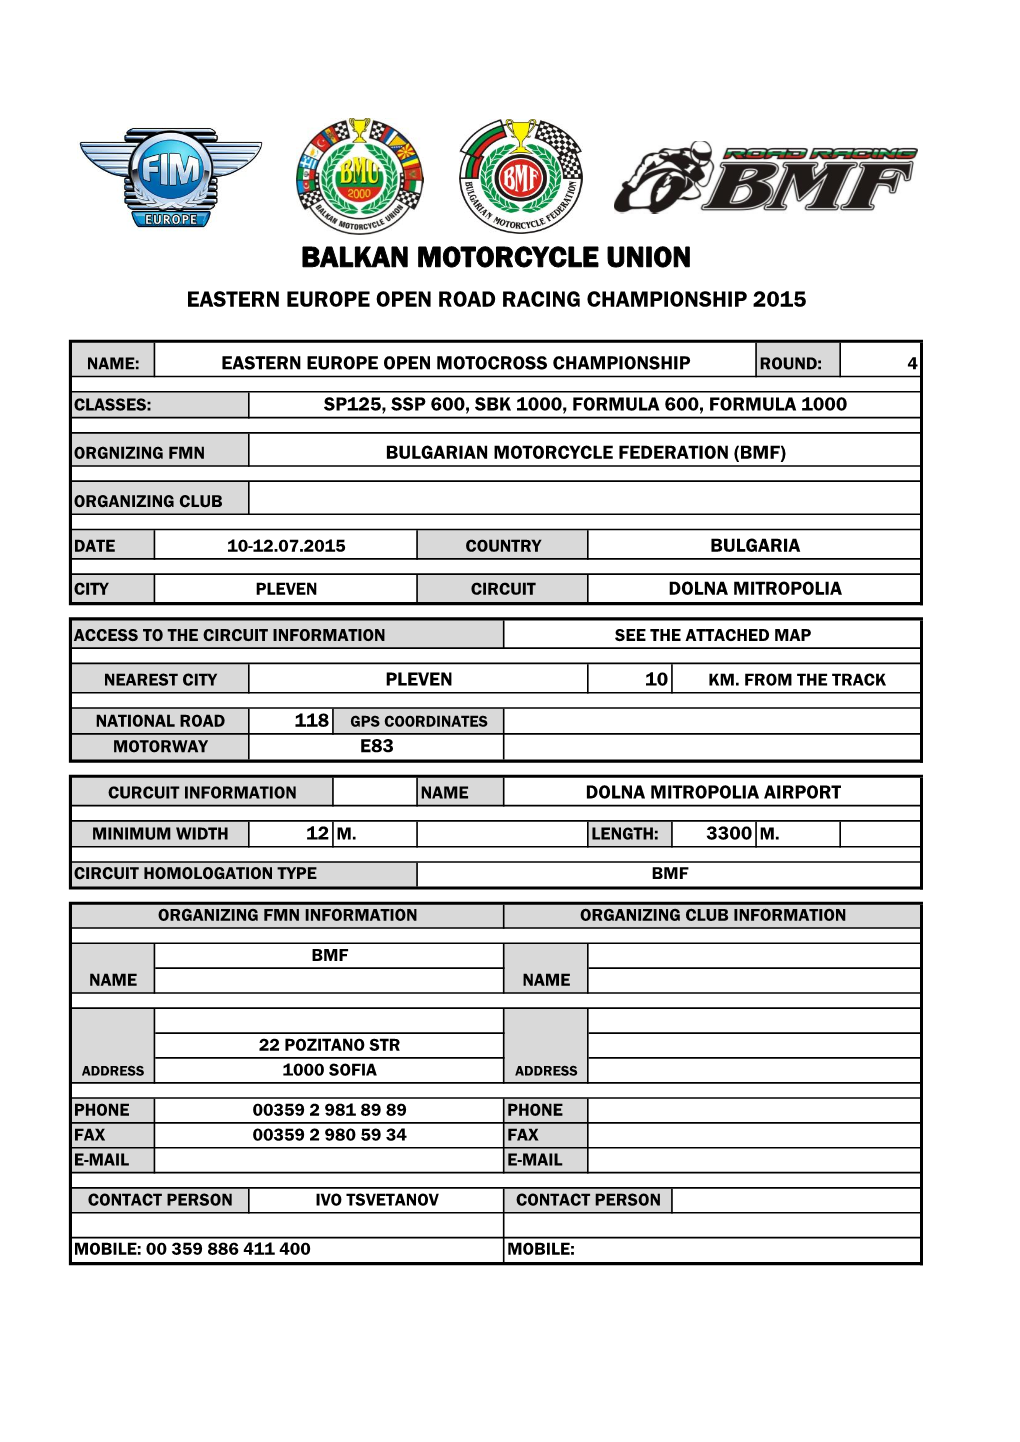 Balkan Motorcycle Union Eastern Europe Open Road Racing Championship 2015